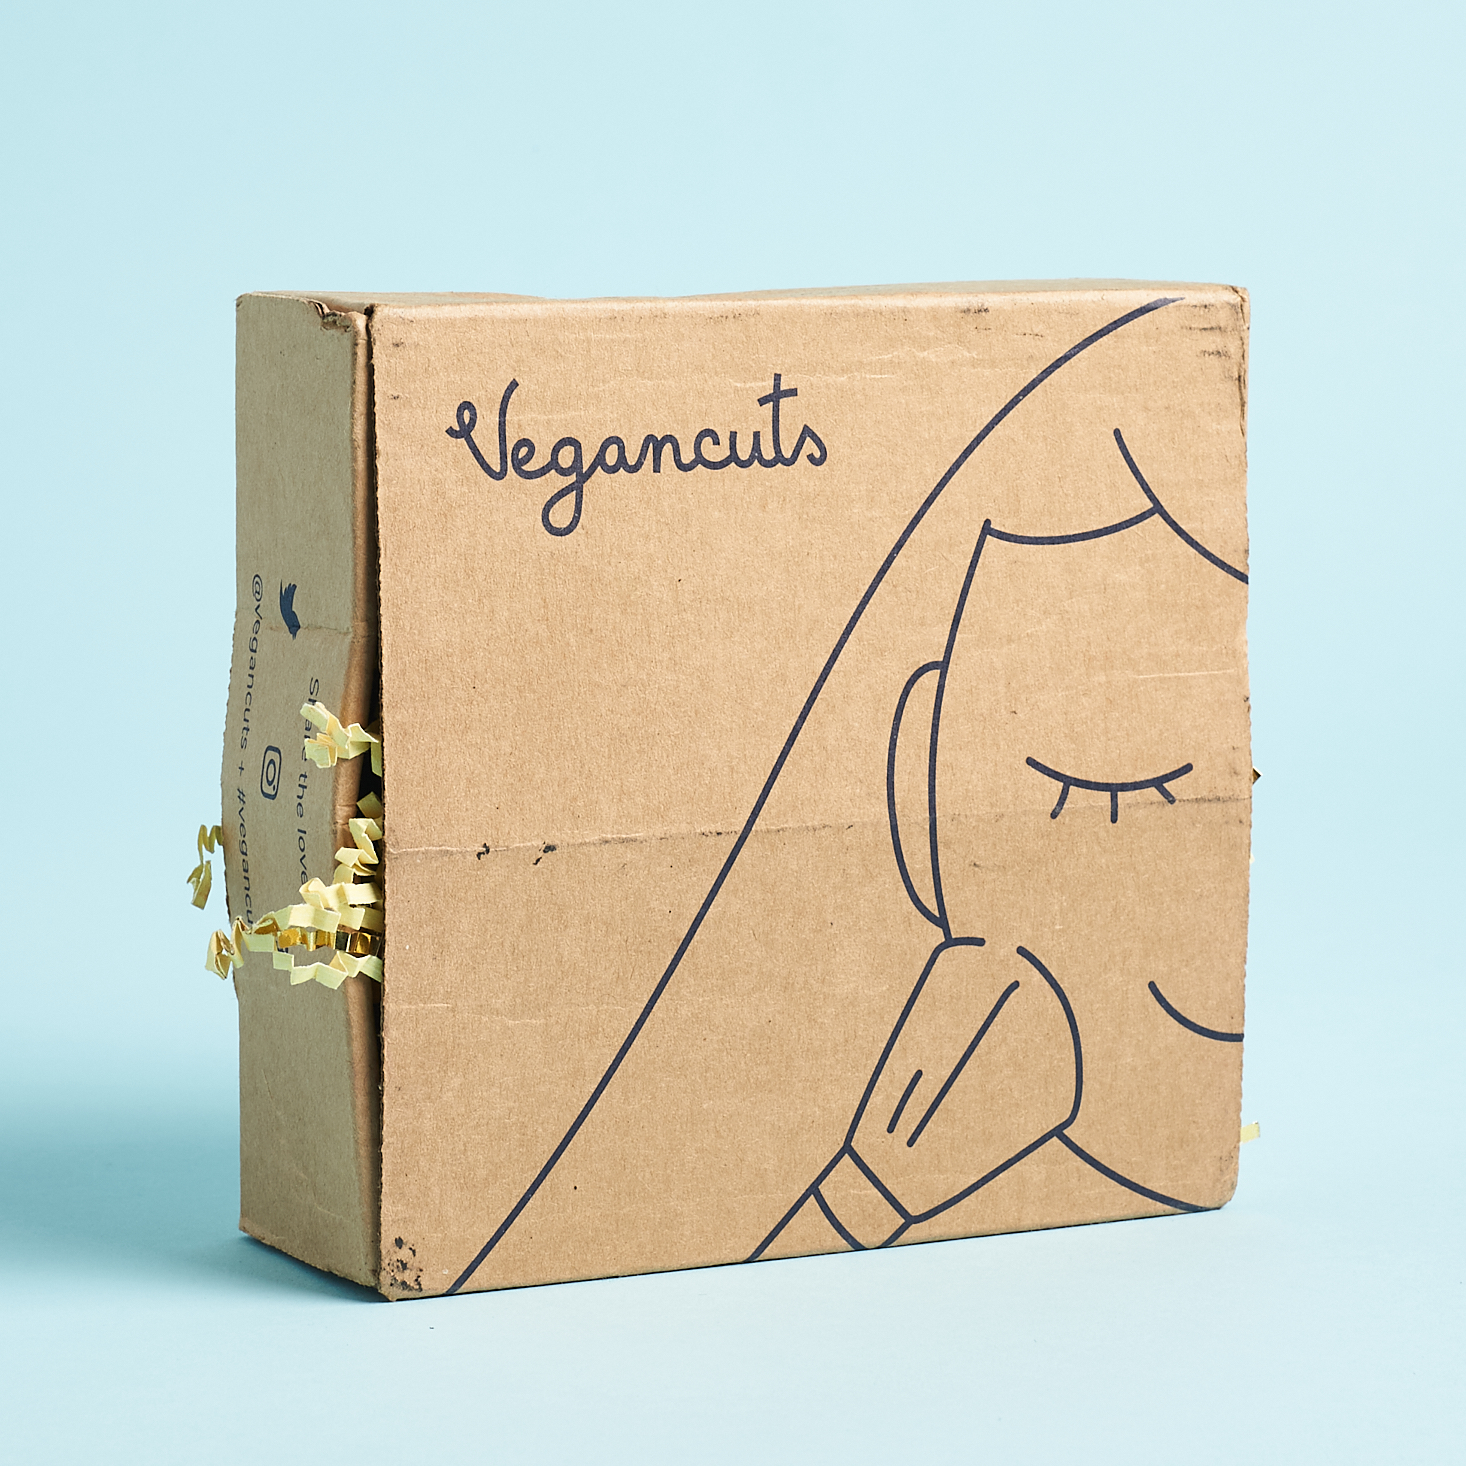 Vegancuts Makeup Box “Bronzed & Bright” Review – Summer 2020